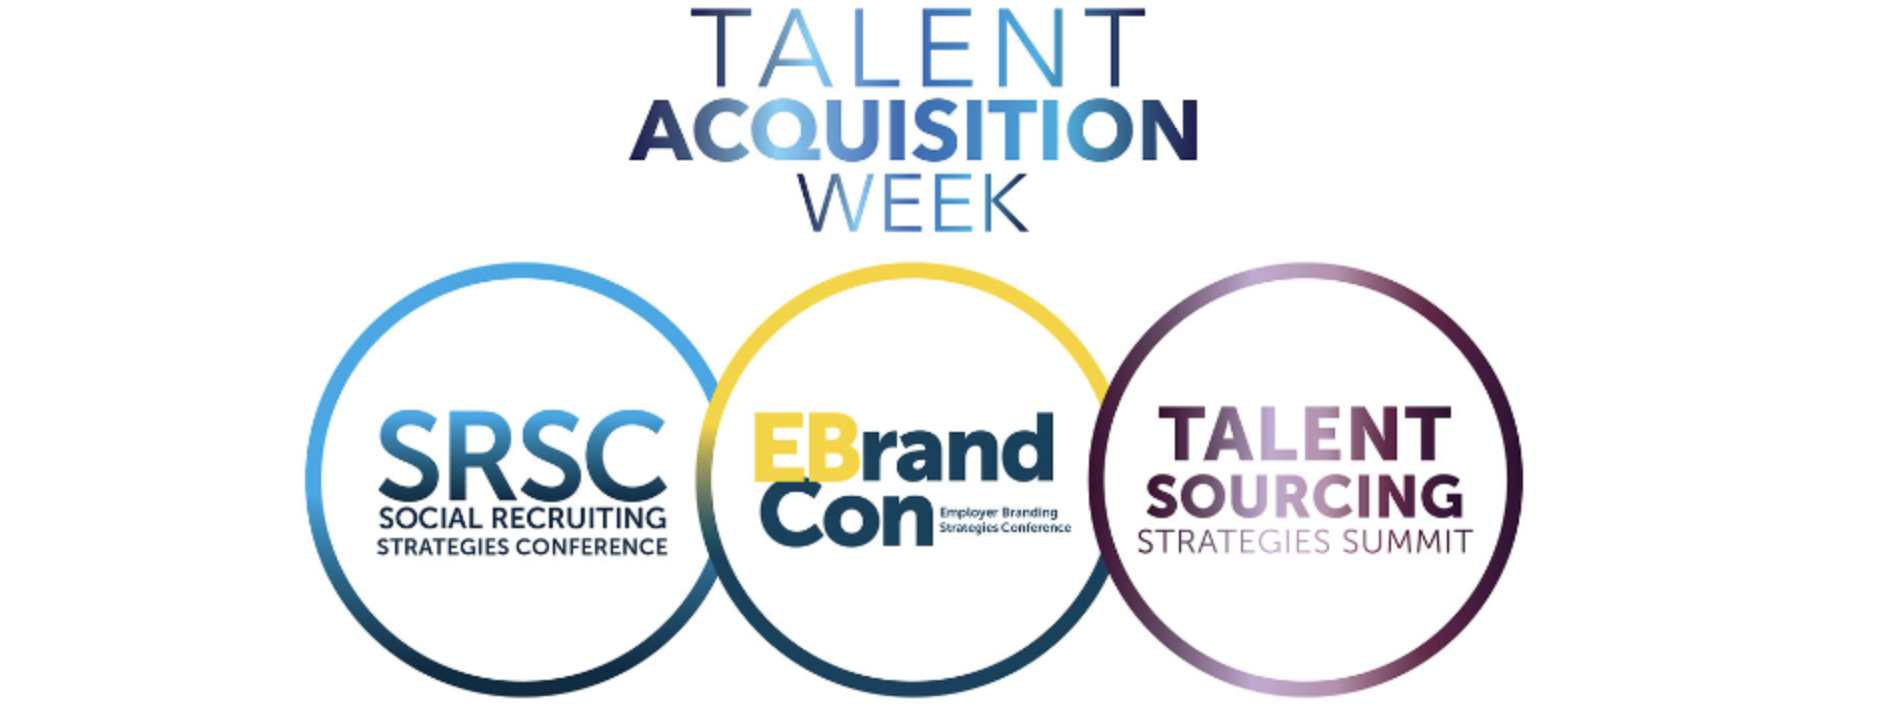 Talent Acquisition Week 